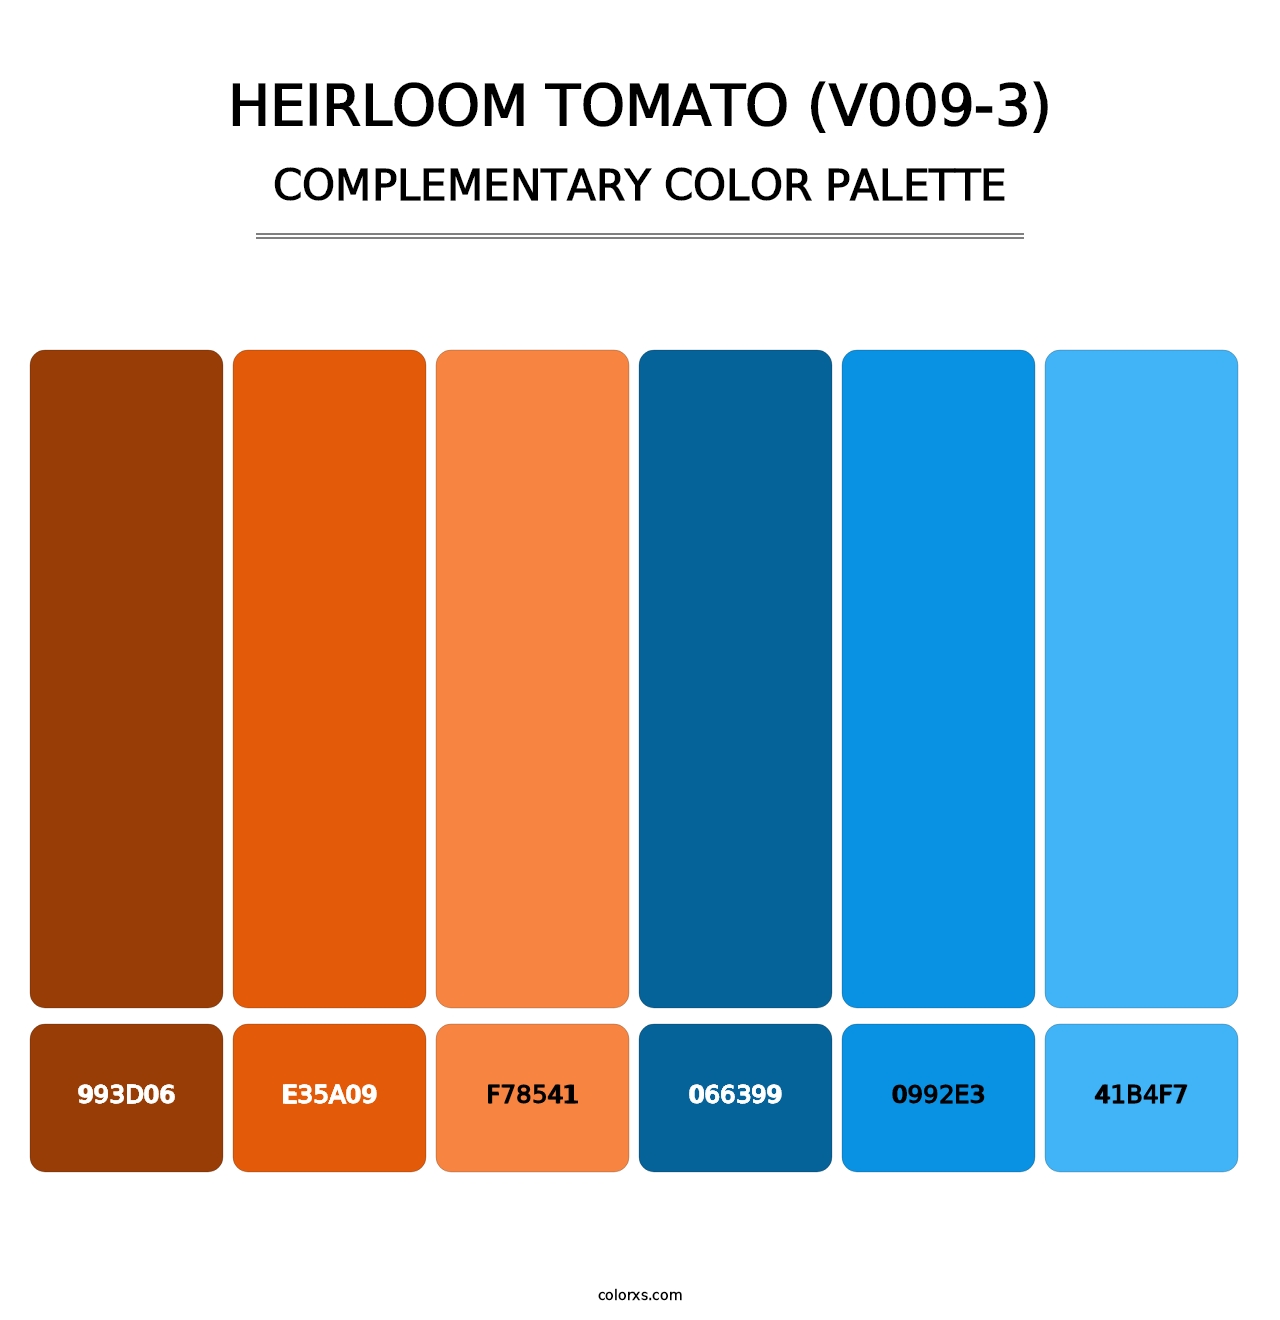 Heirloom Tomato (V009-3) - Complementary Color Palette